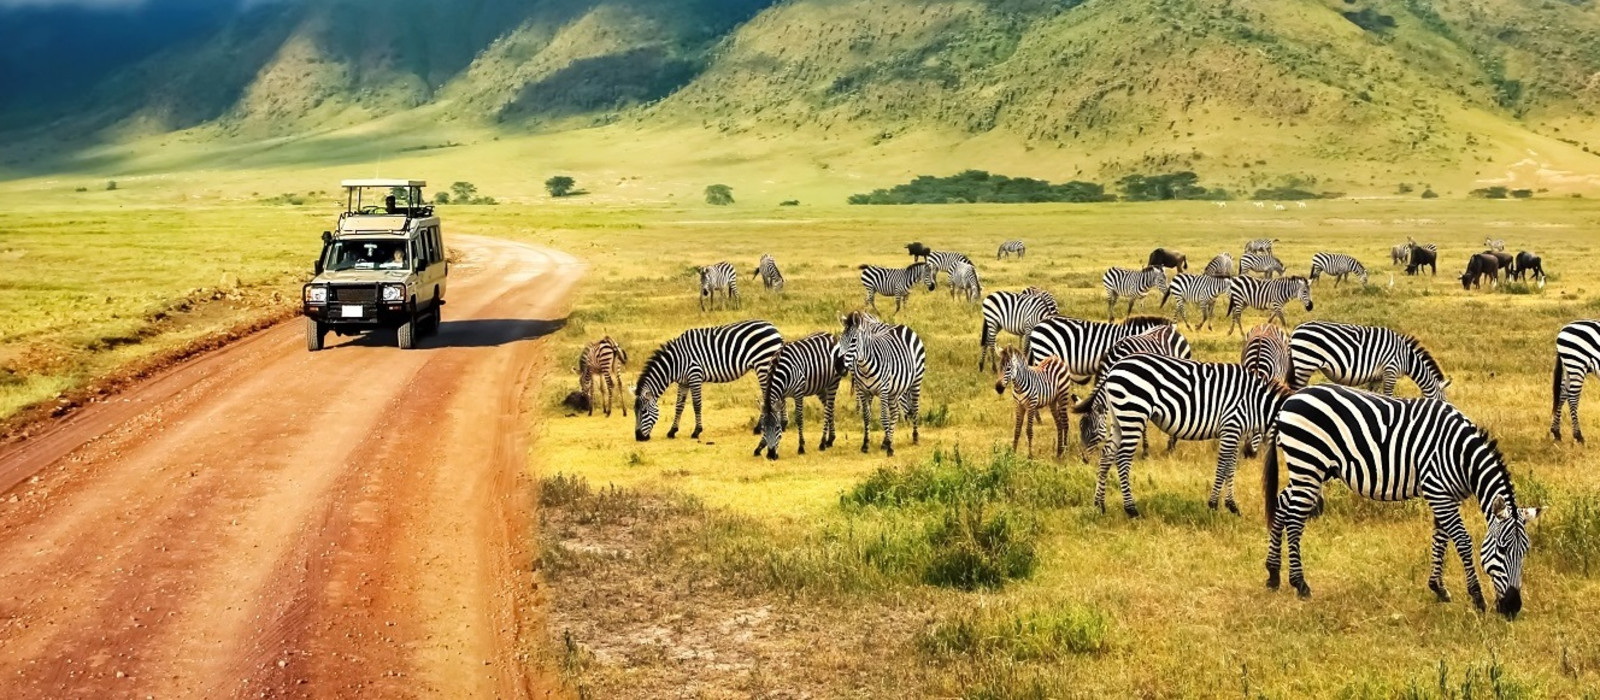 afrika safari und strand